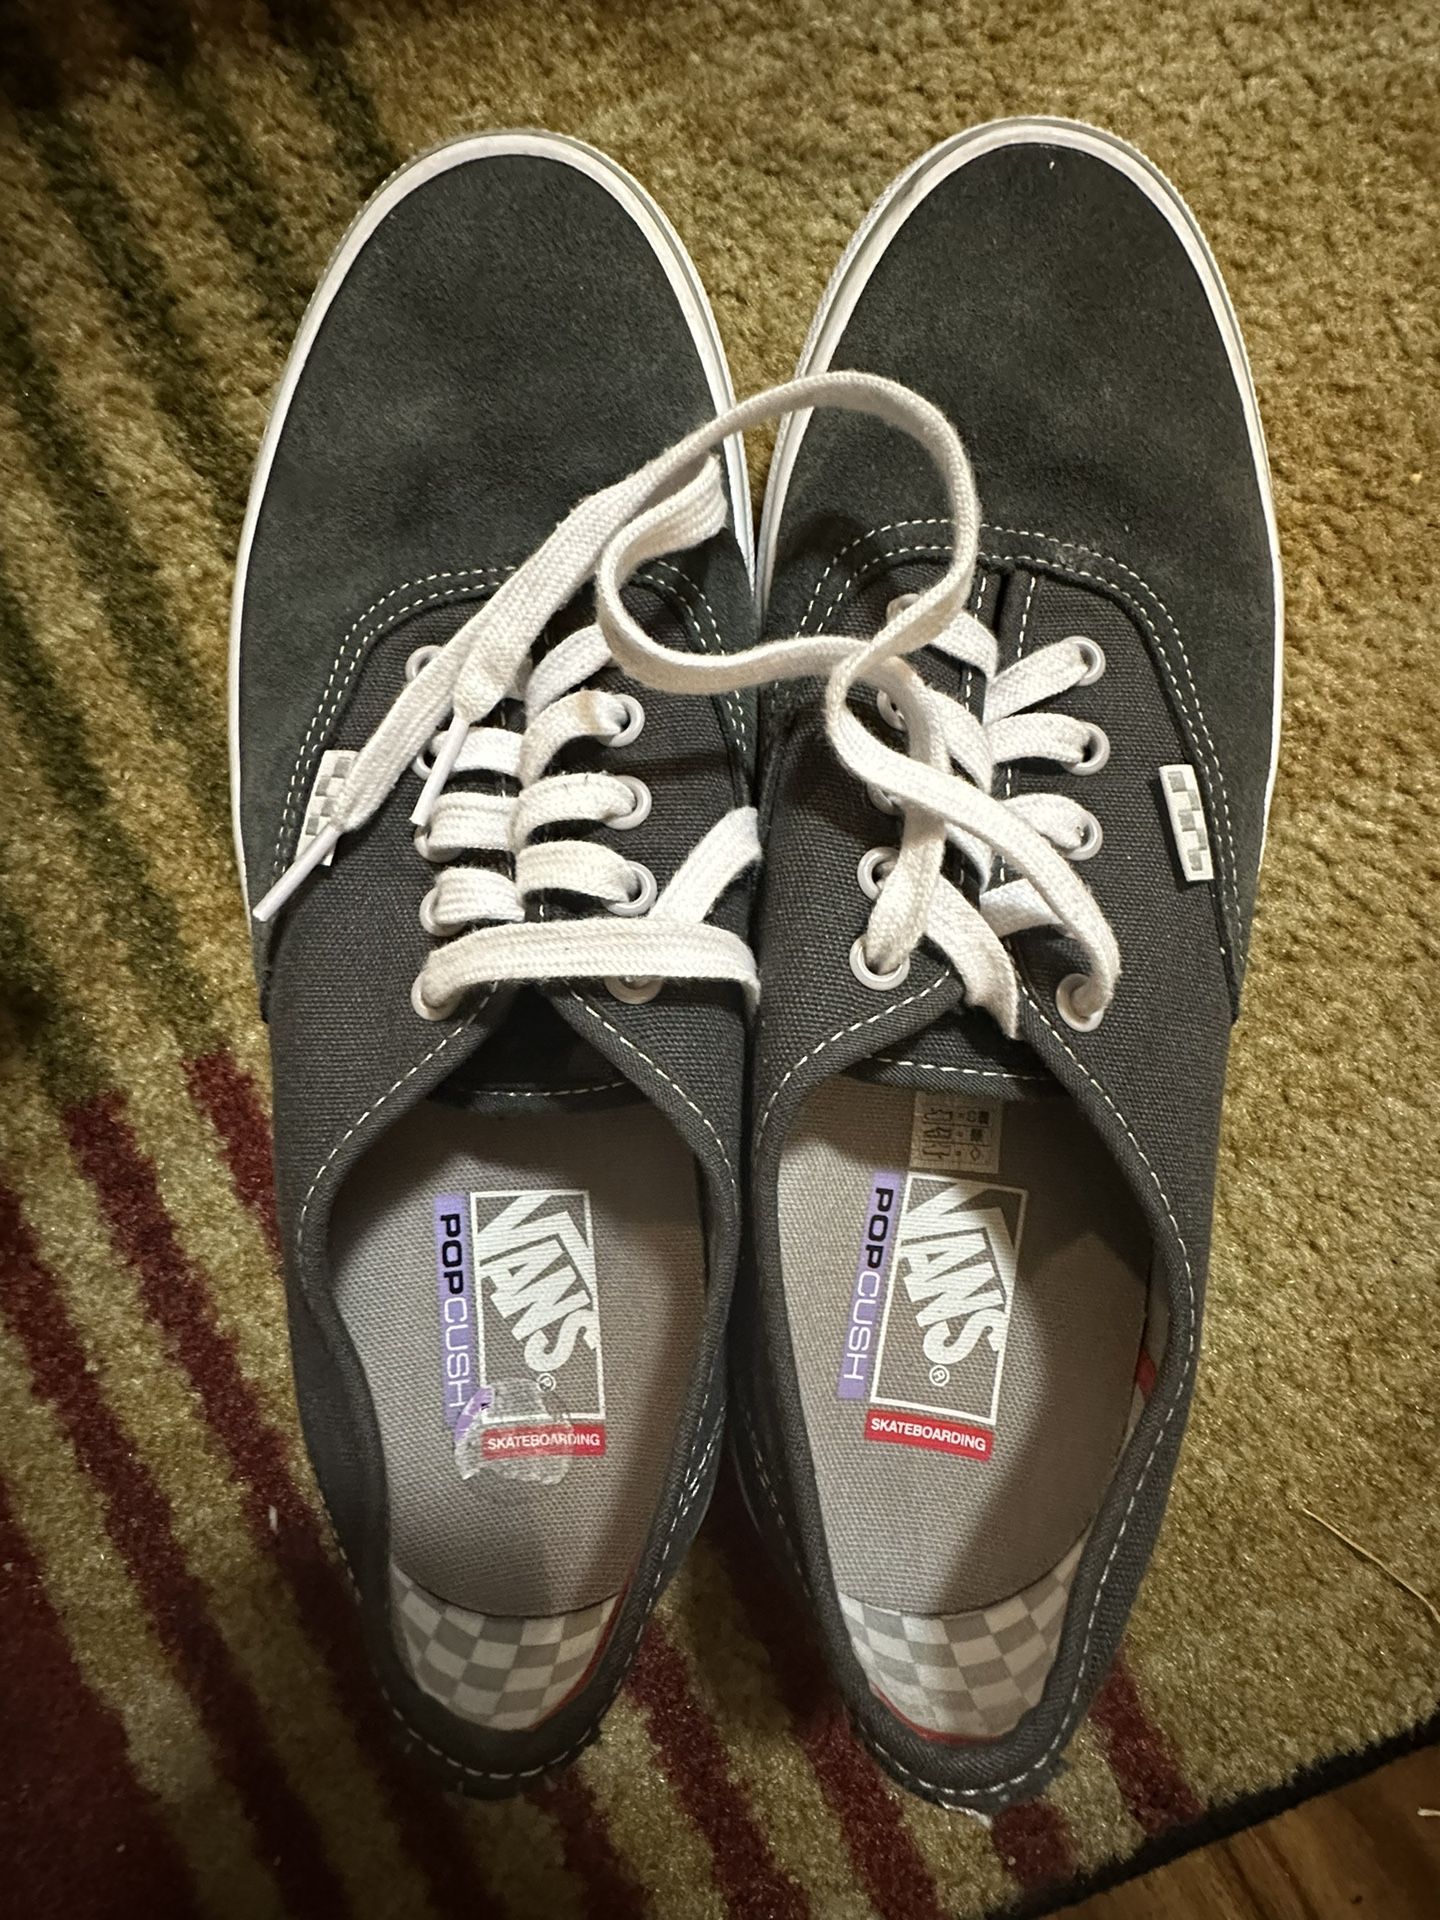 Vans Popcush Shoes New - Mens 10.5 Dark Gray